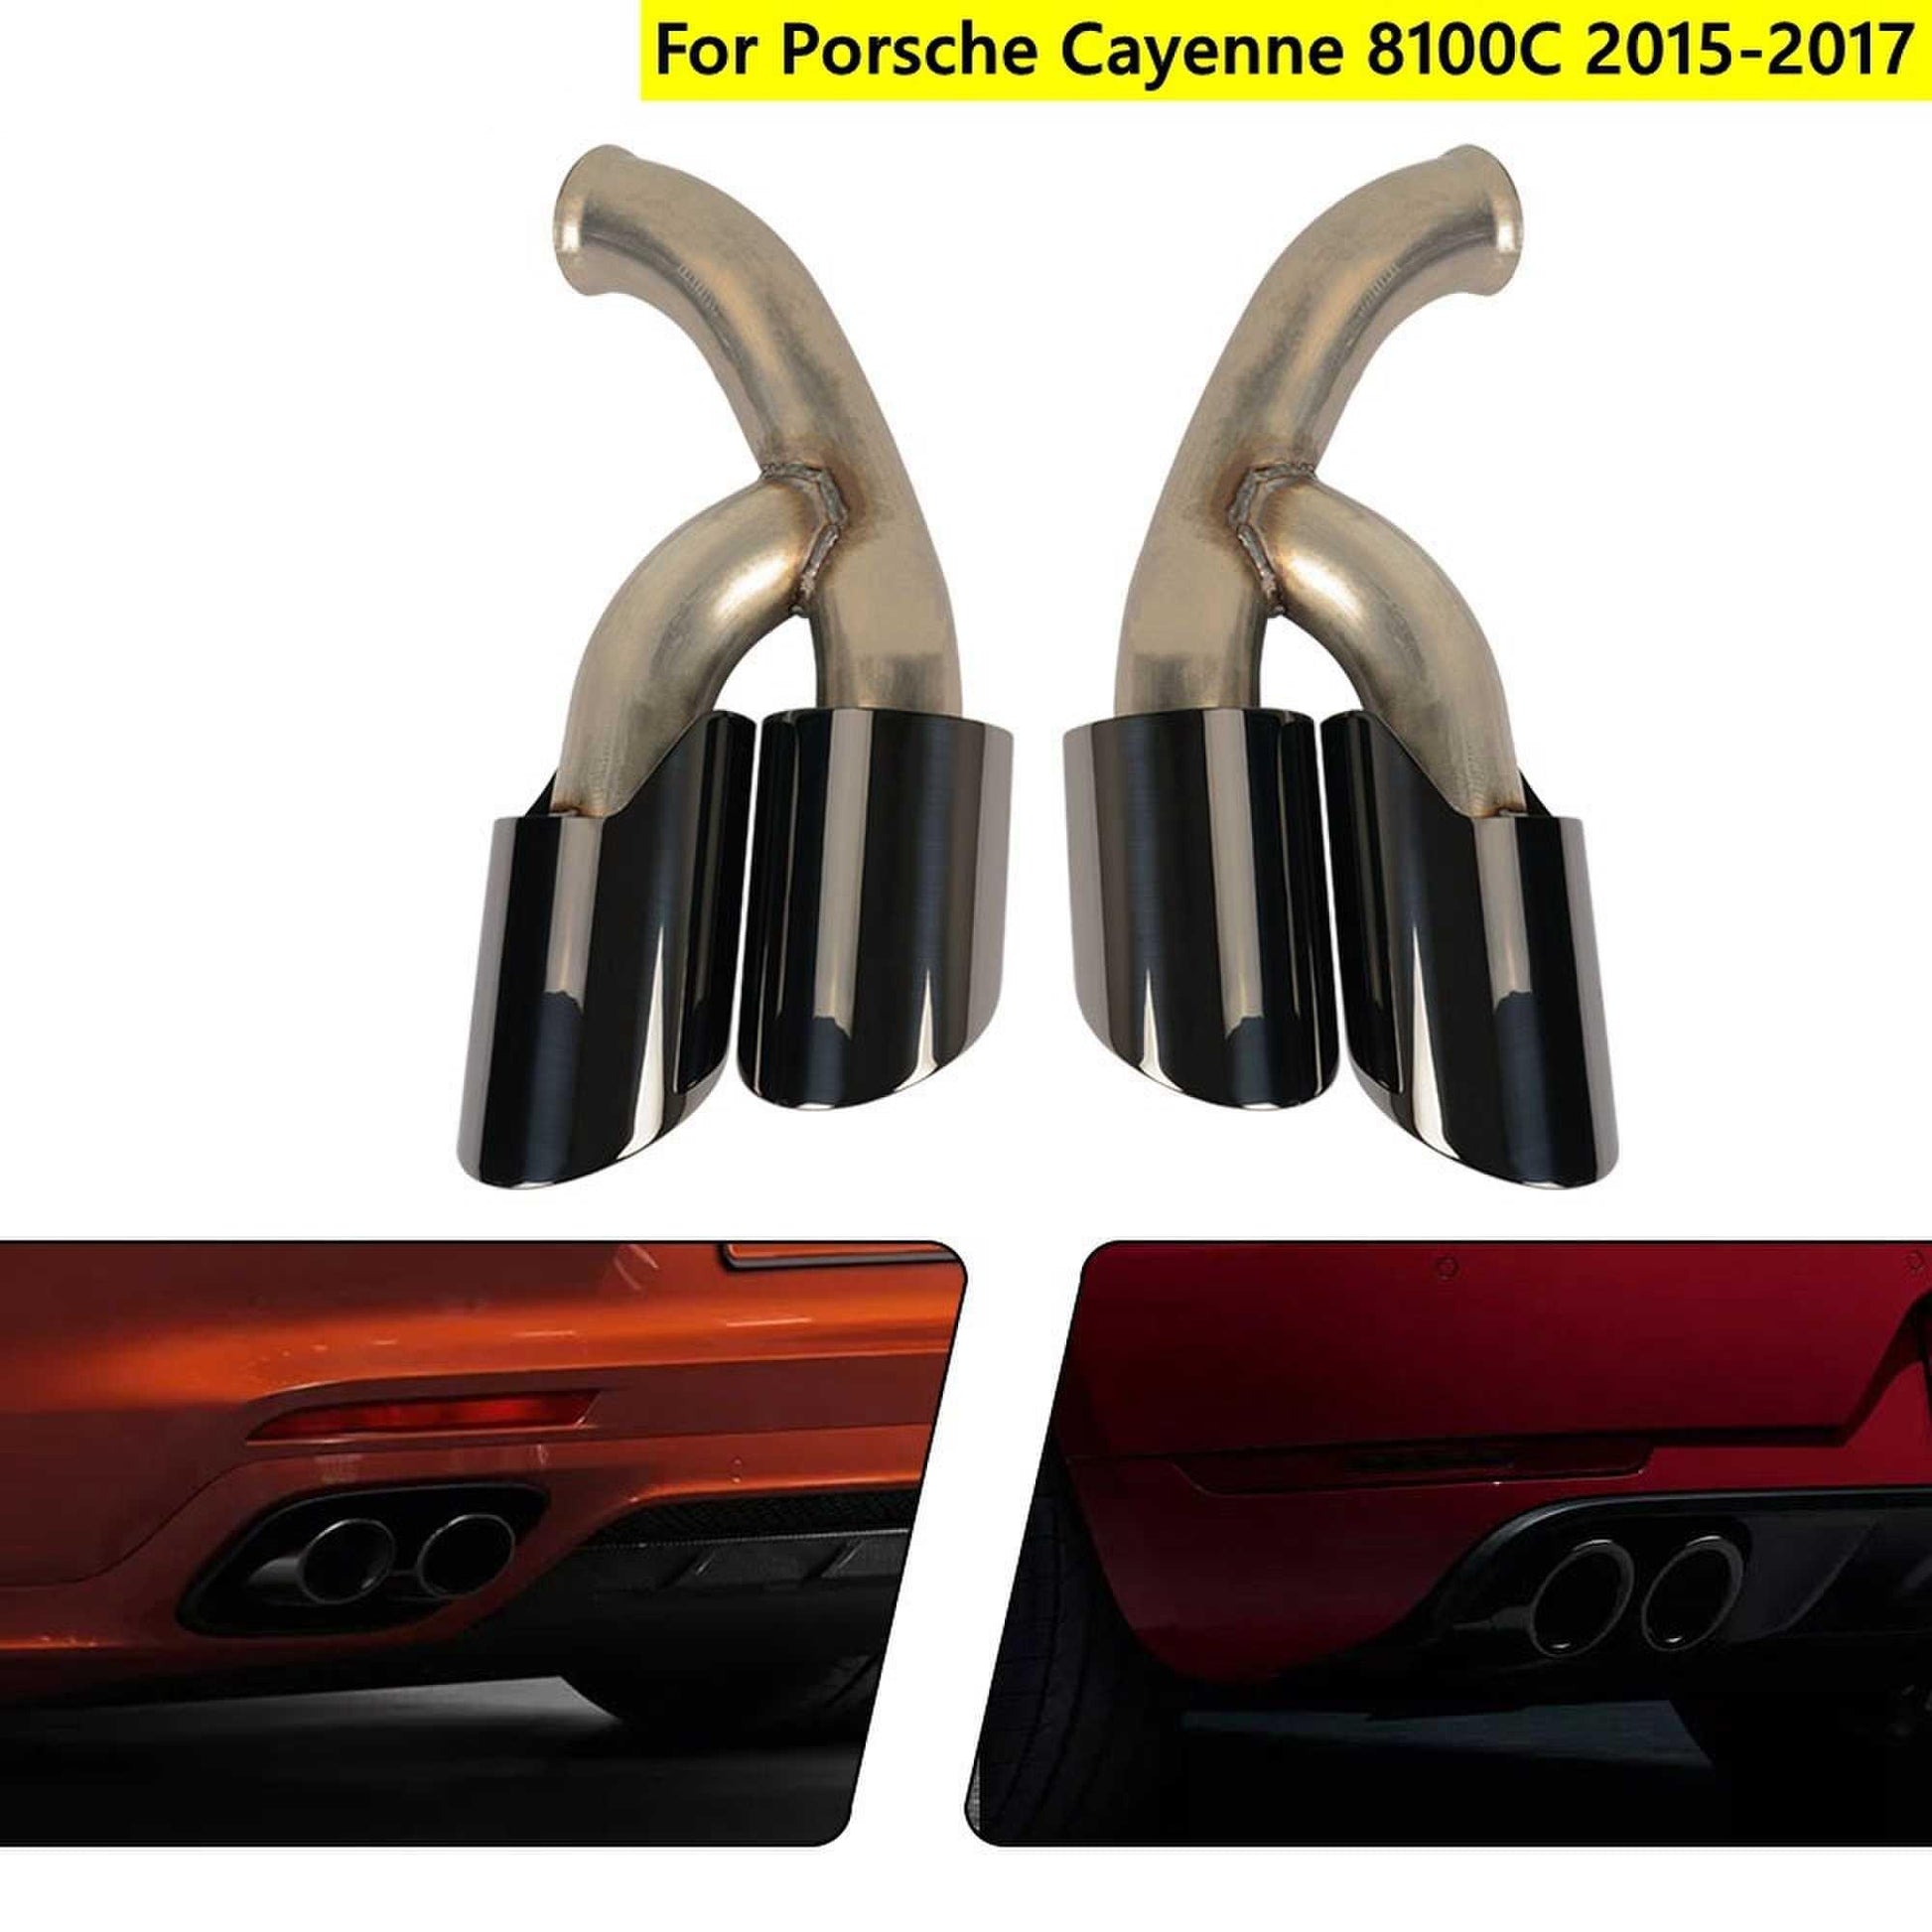 RASTP 1 Pair Exhaust Tips Muffler Exhaust Tail Pipe for Porsche Cayenne 8100C 2015-2017 - RASTP